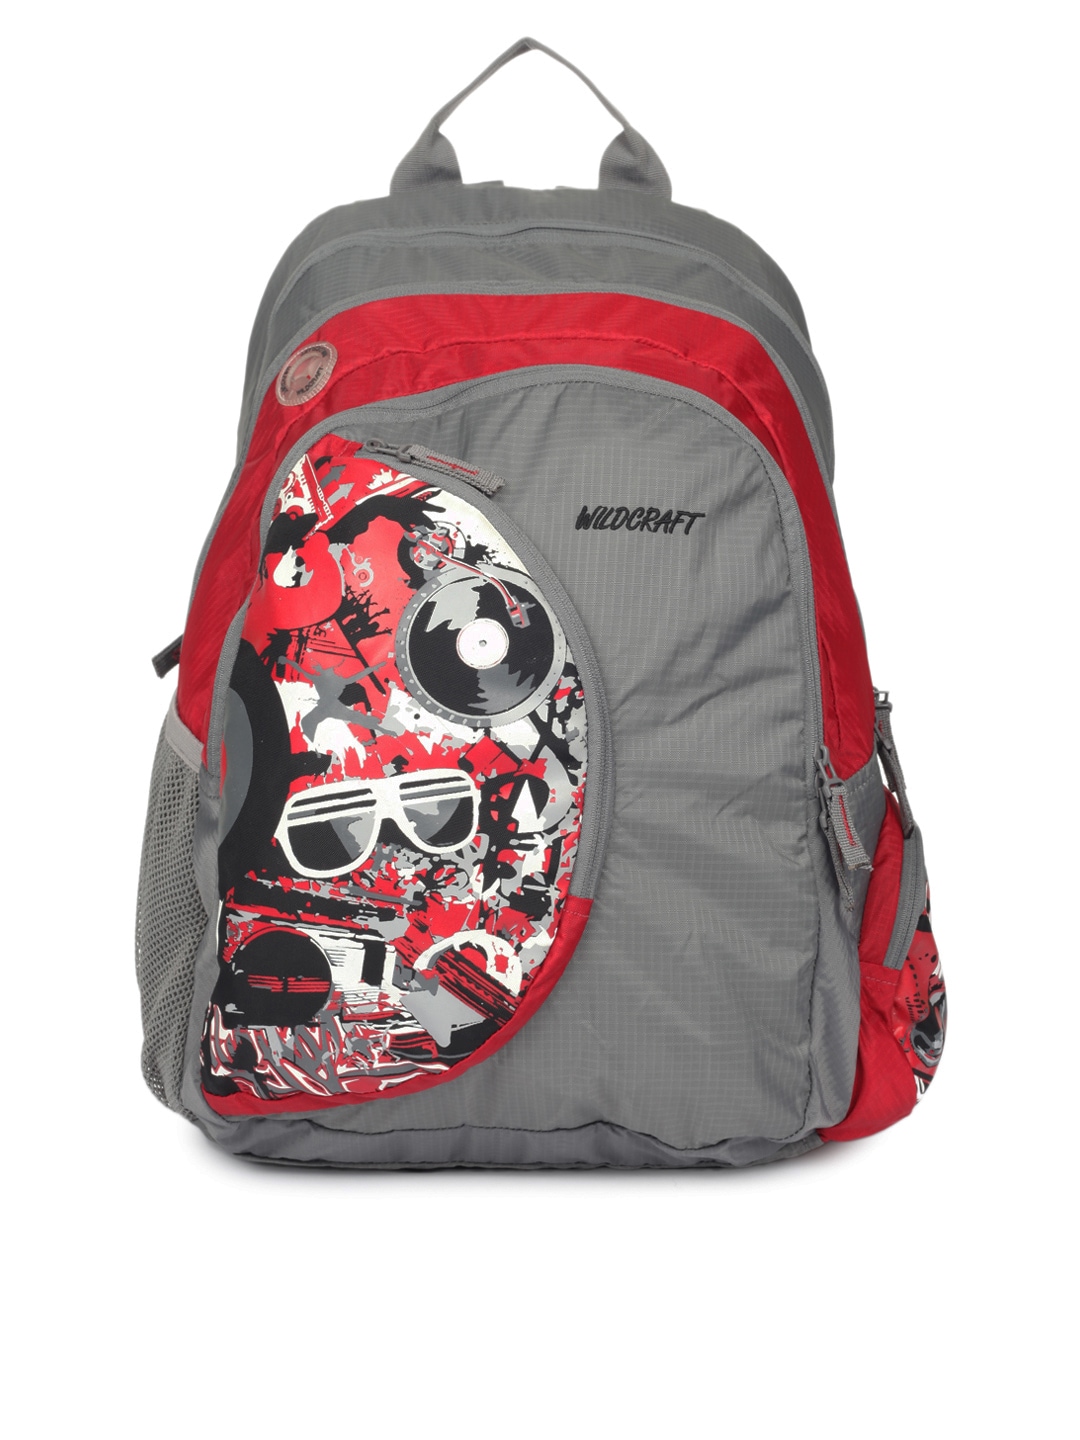 Wildcraft Unisex Grey & Red Printed Laptop Backpack